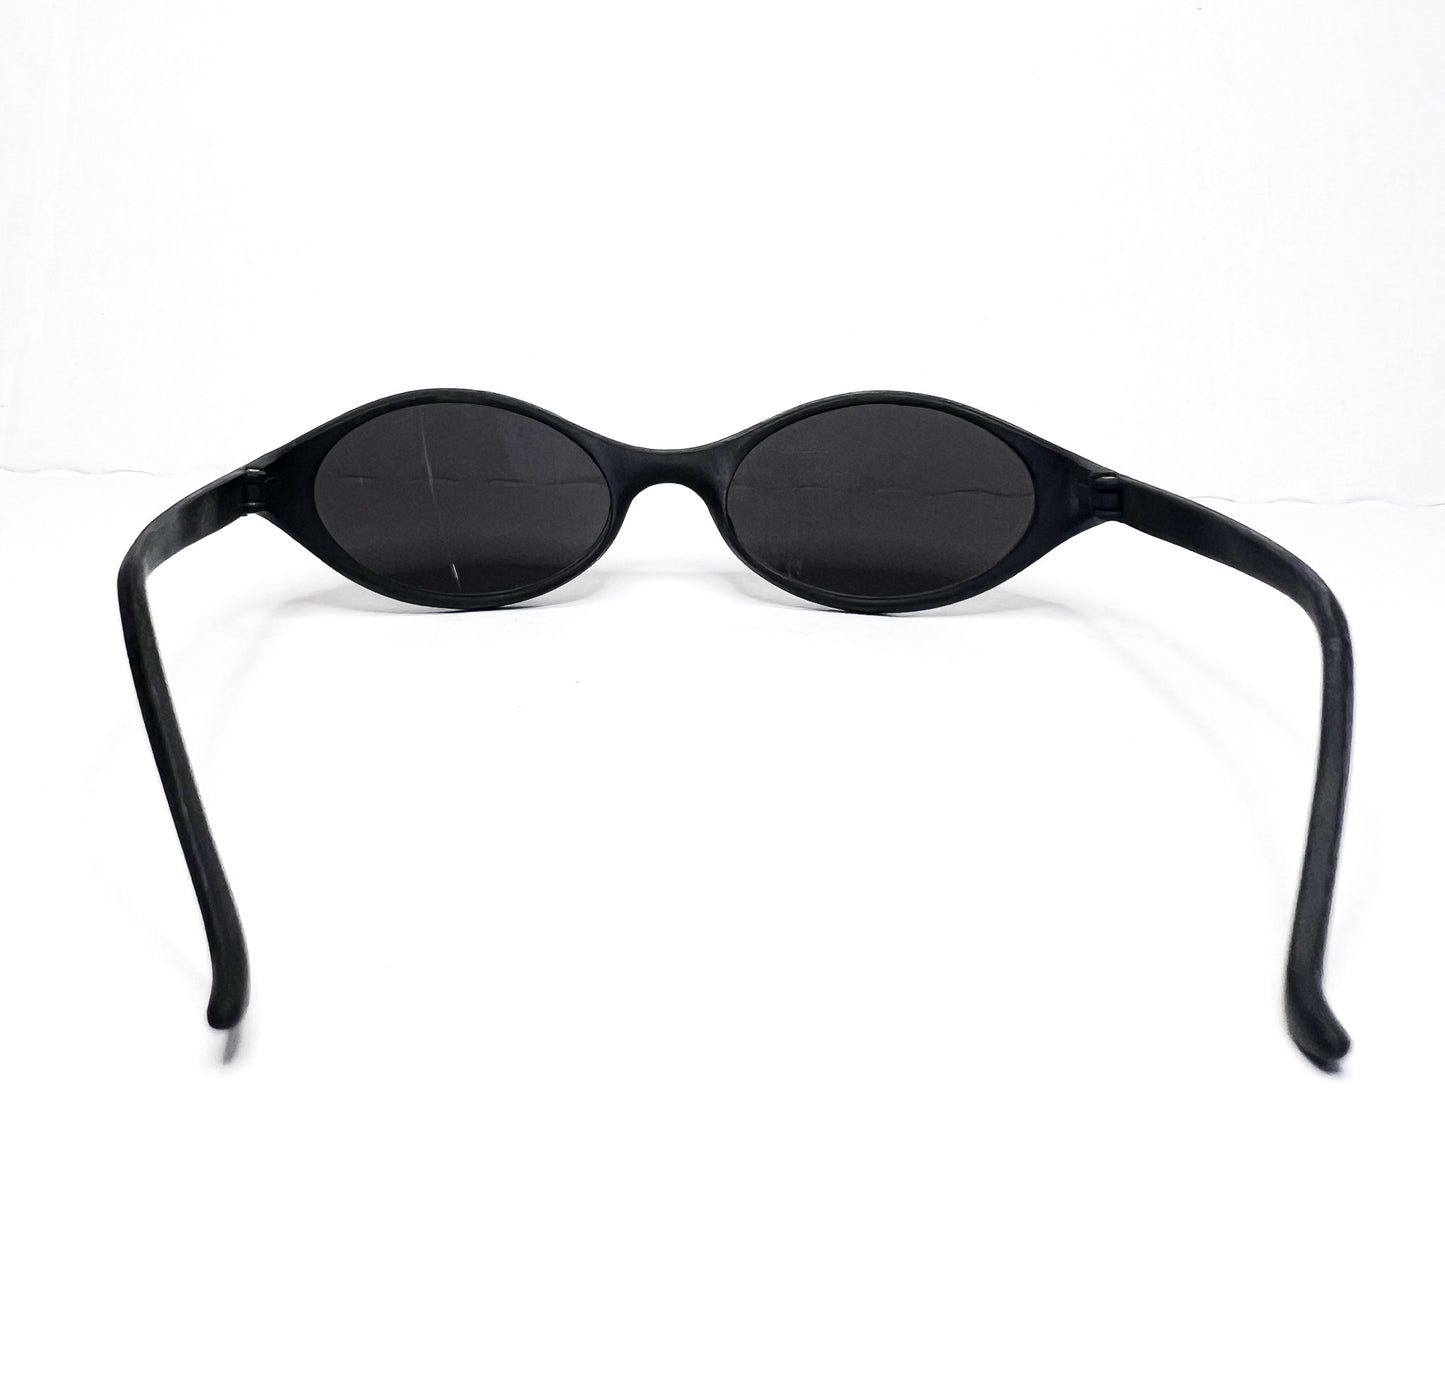 SX Wrapped black racer sunglasses